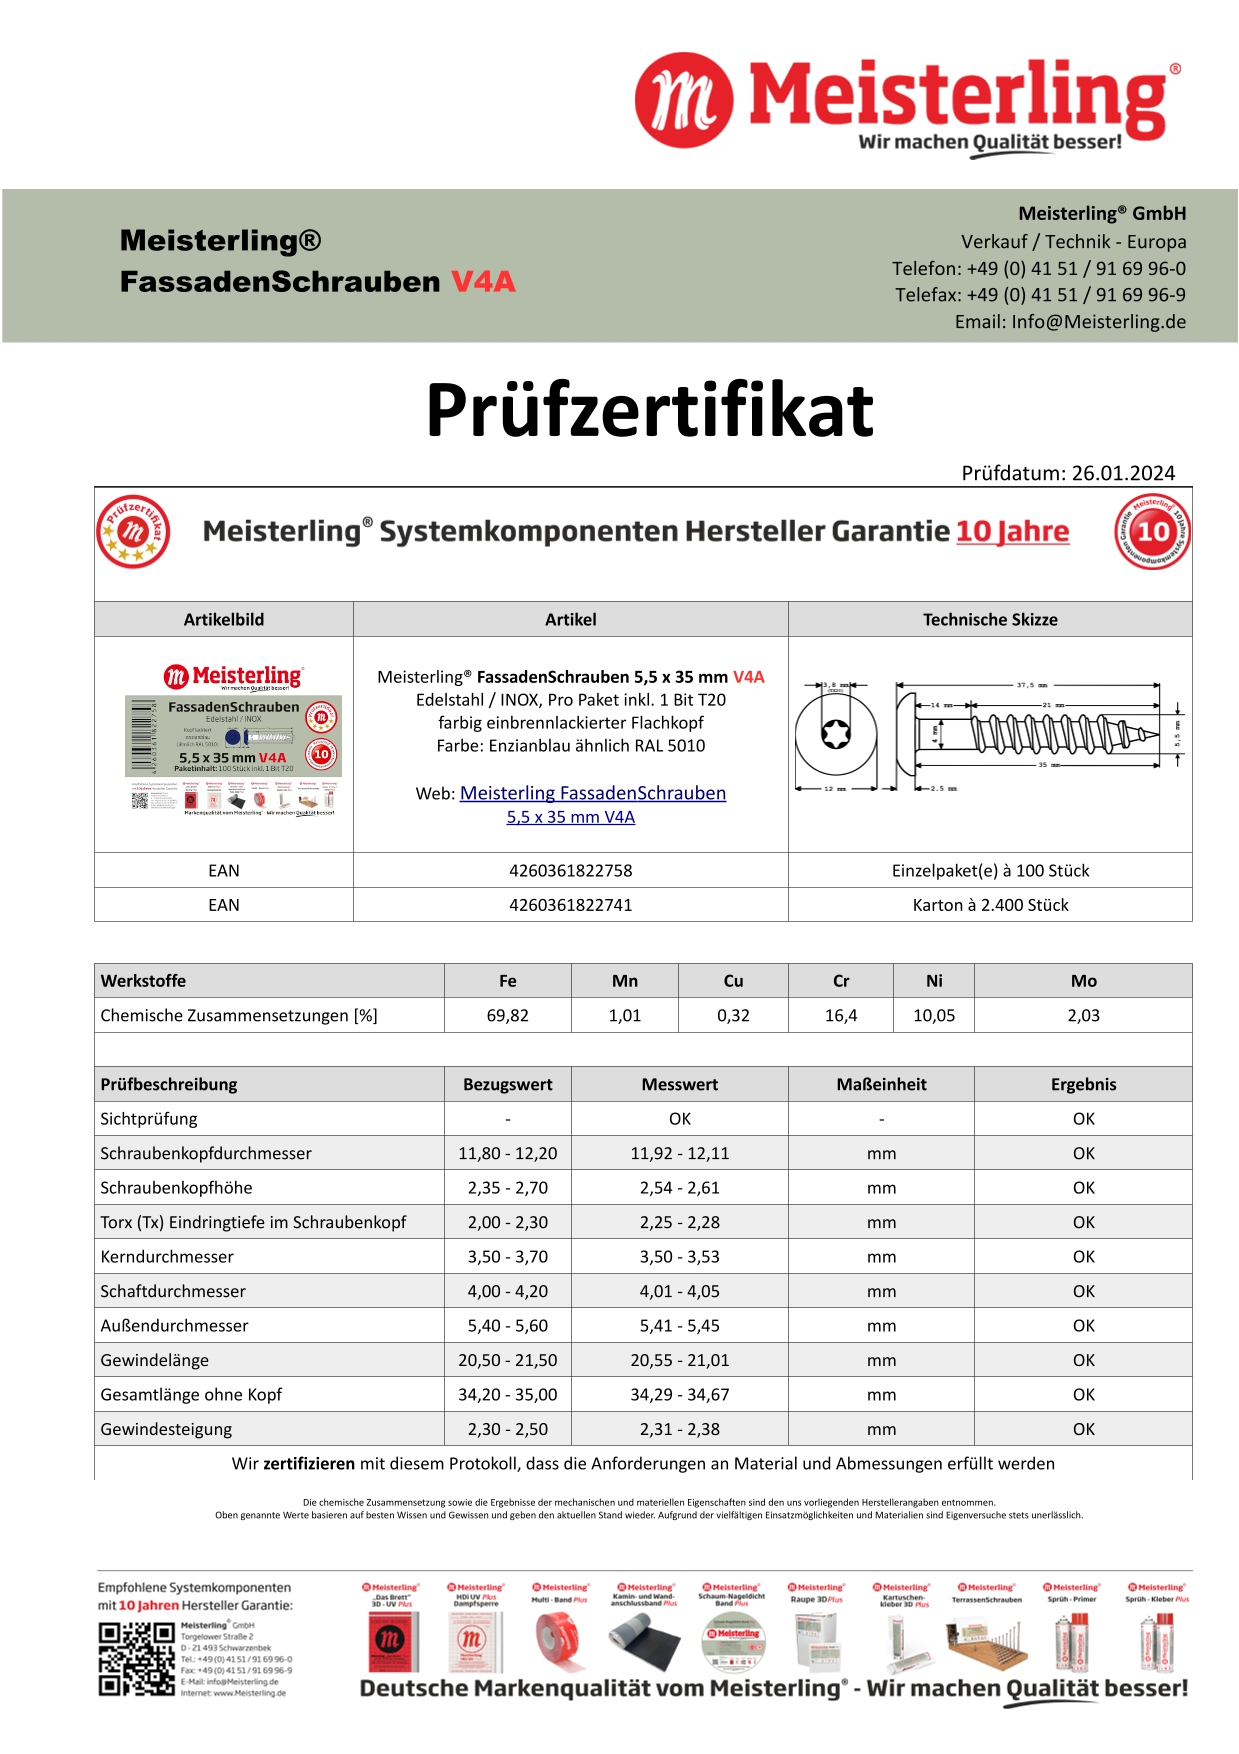 Prüfzertifikat Meisterling® FassadenSchrauben 5,5 x 35 mm V4a enzianblau